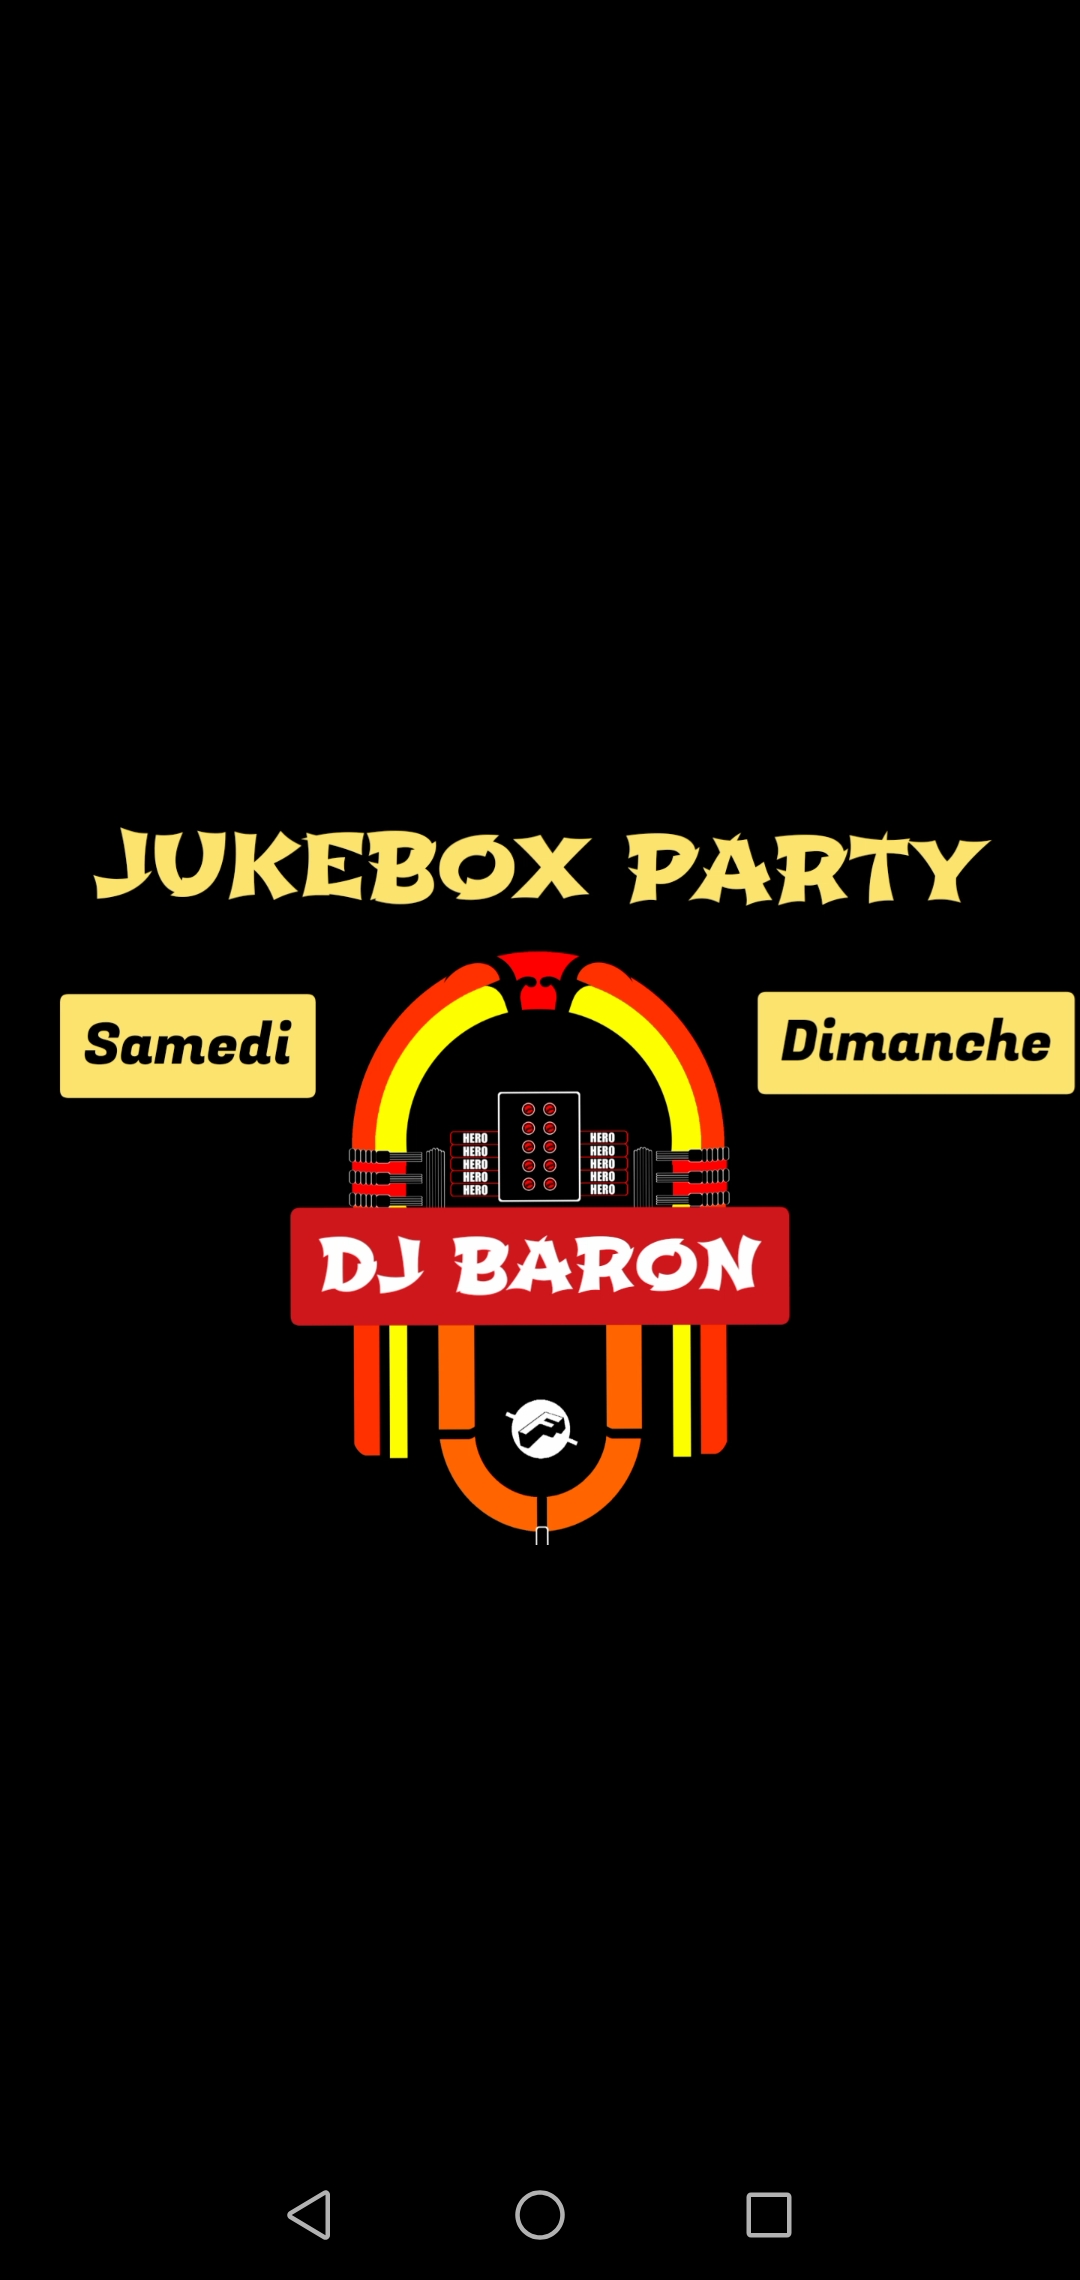 JUKEBOX PARTY 70-80 / Samedi et Dimanche Midi-13h 